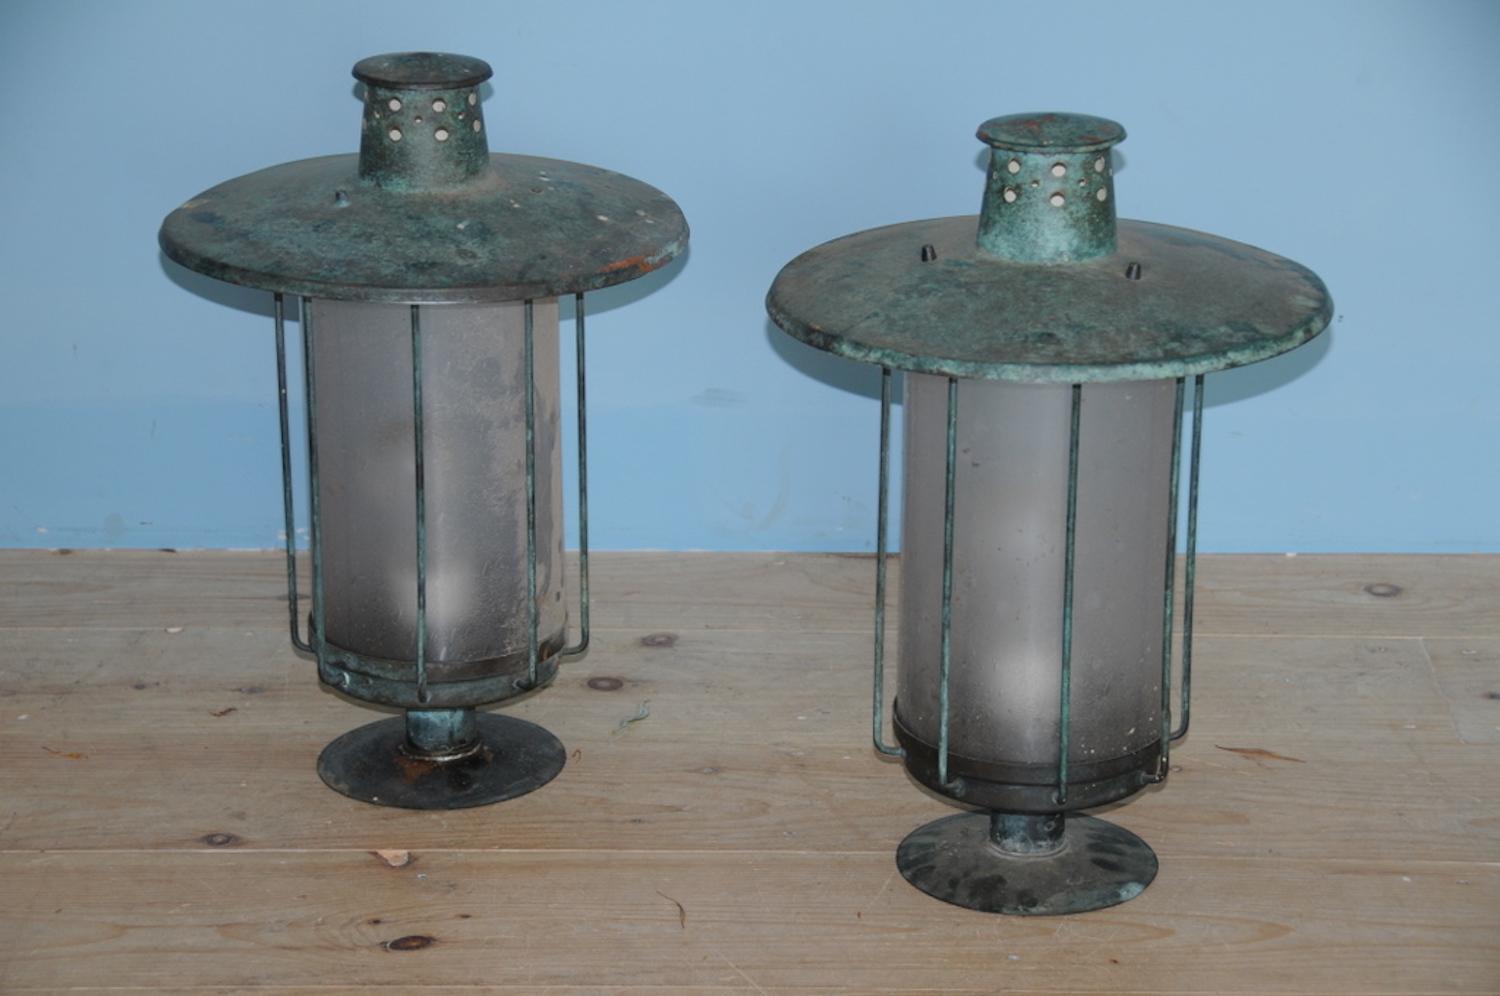 A pair of Swedish post lanterns, origin: Sweden, circa 1920 -1930.

